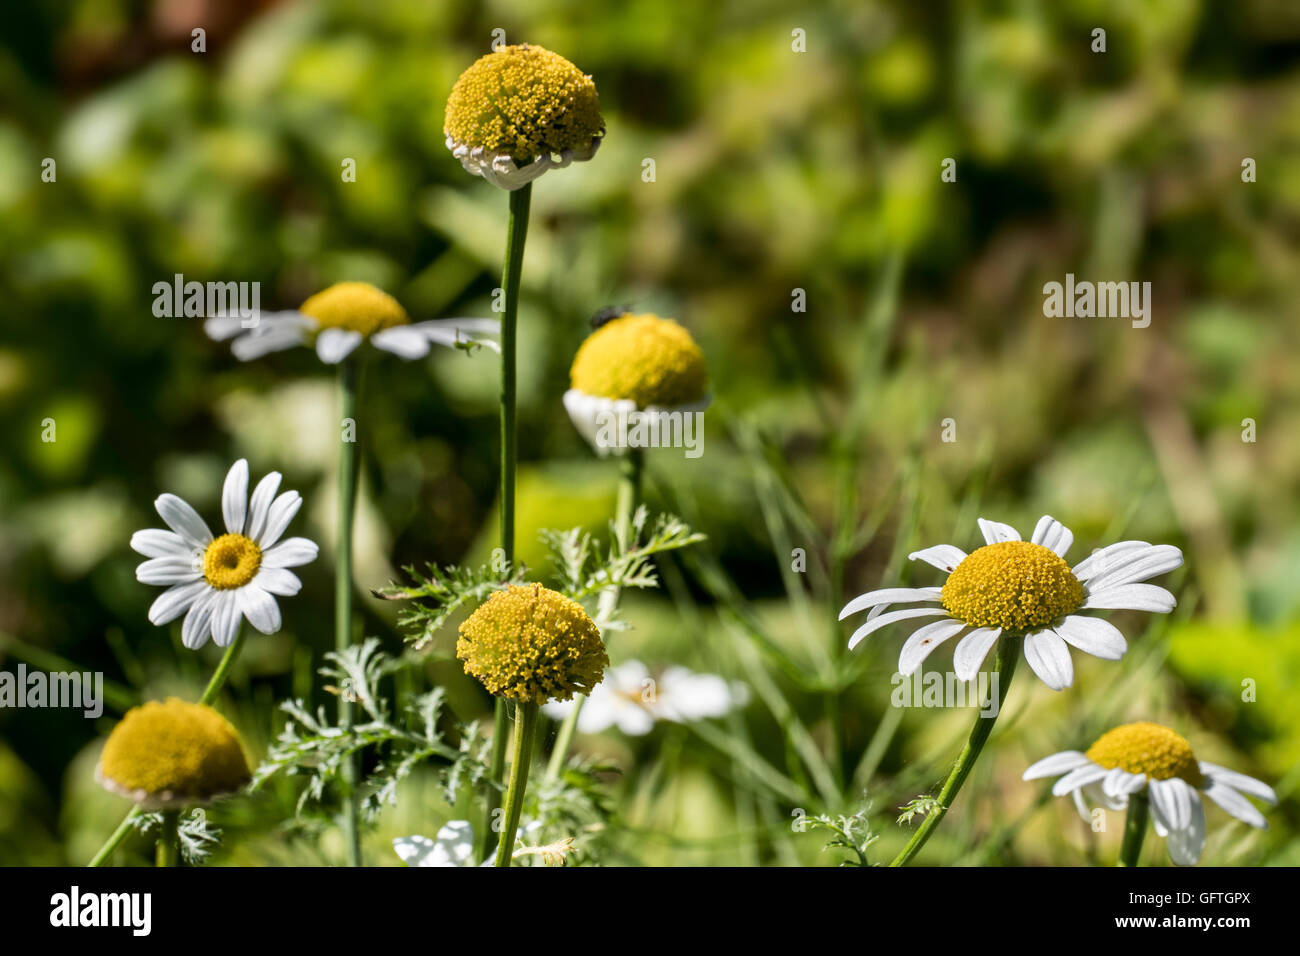 Pellitory / Spanish chamomile / Mount Atlas daisy (Anacyclus pyrethrum / Anacyclus officinarum) in flower Stock Photo